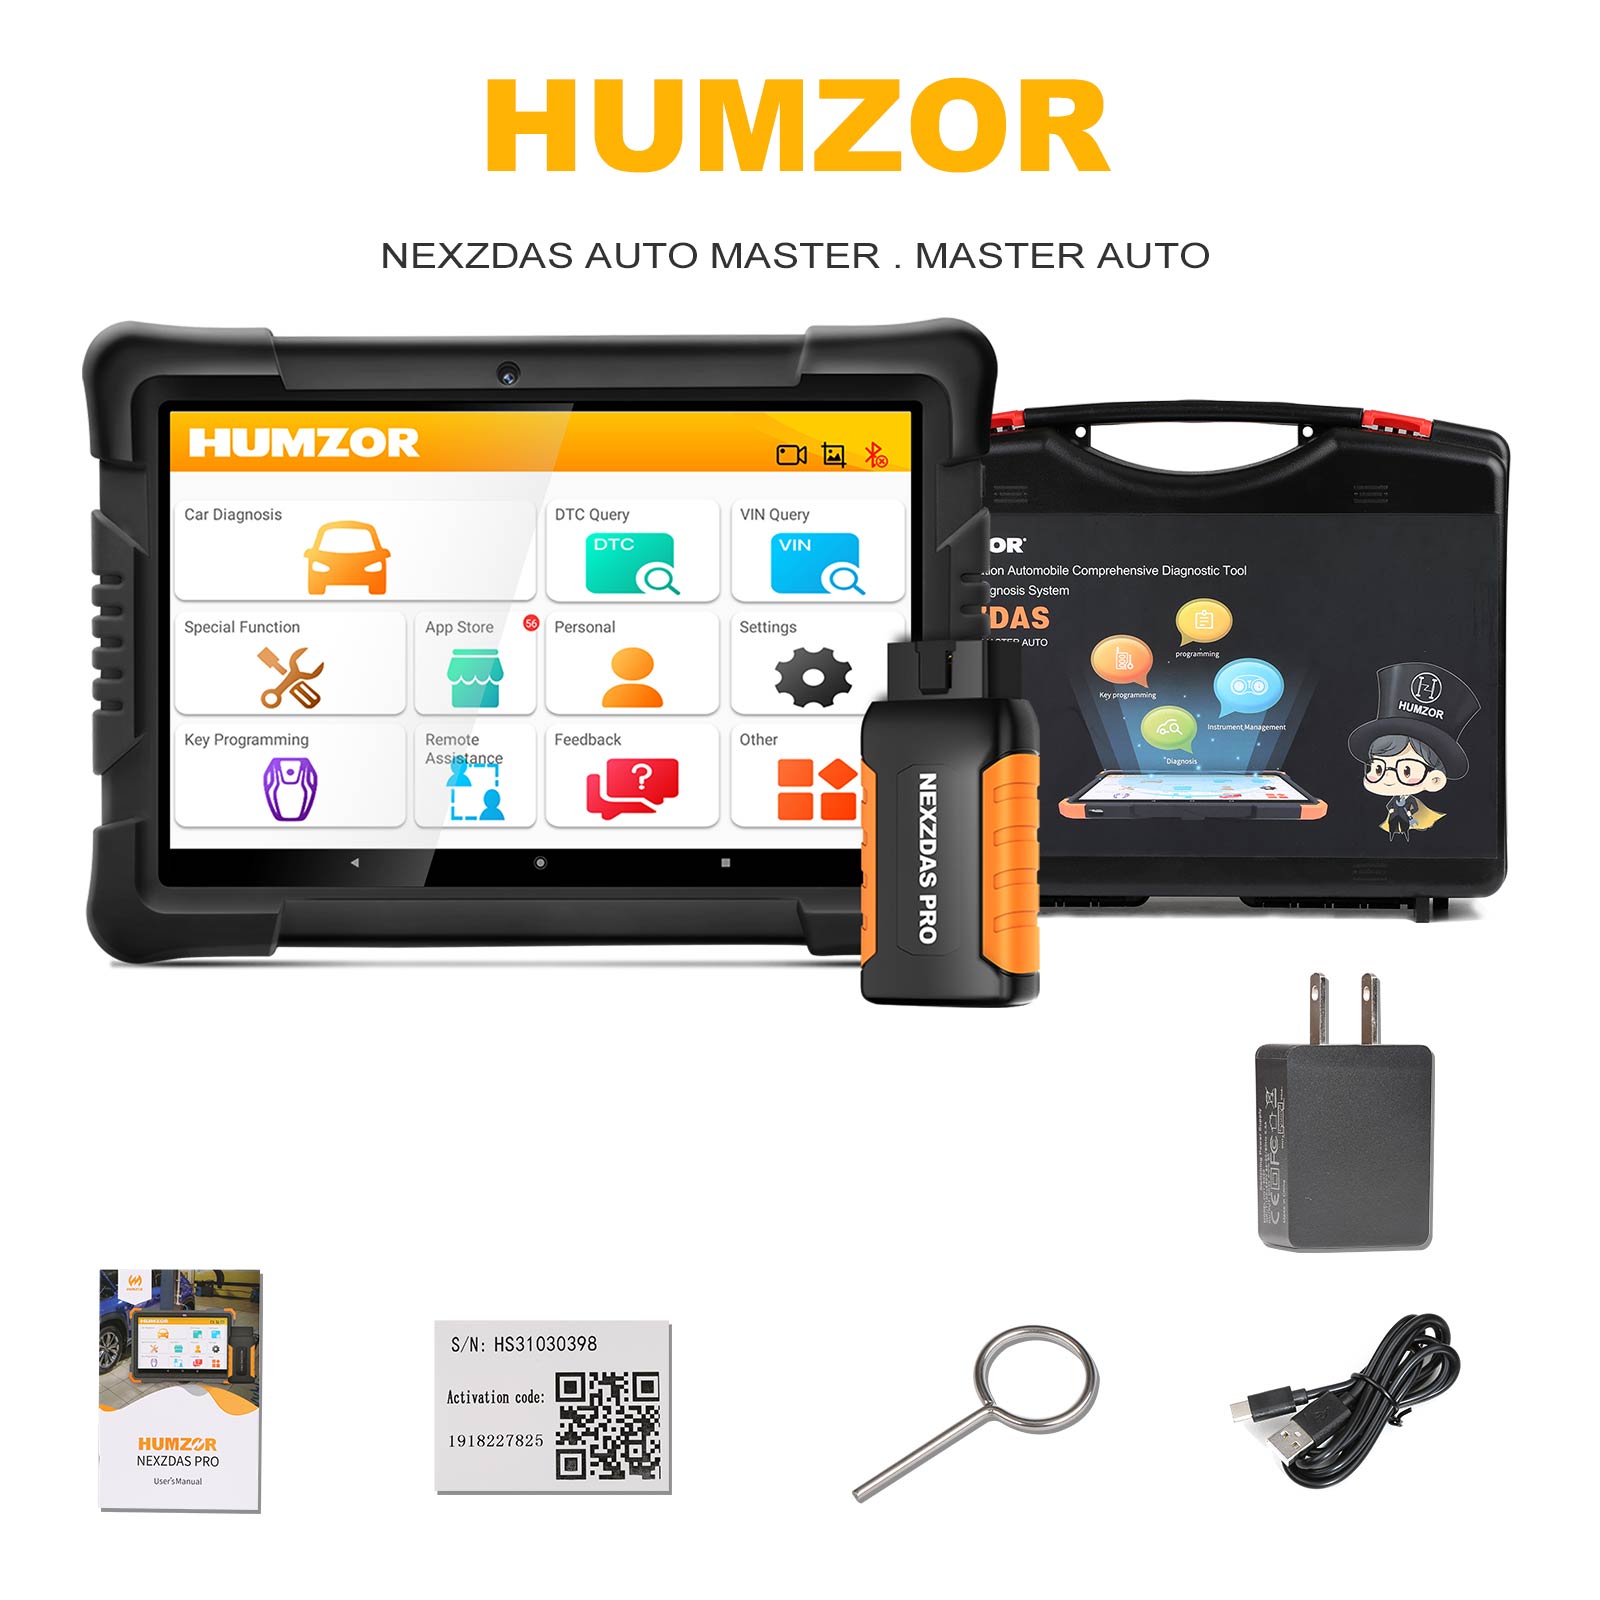 Humzor NexzDAS Pro Packing List